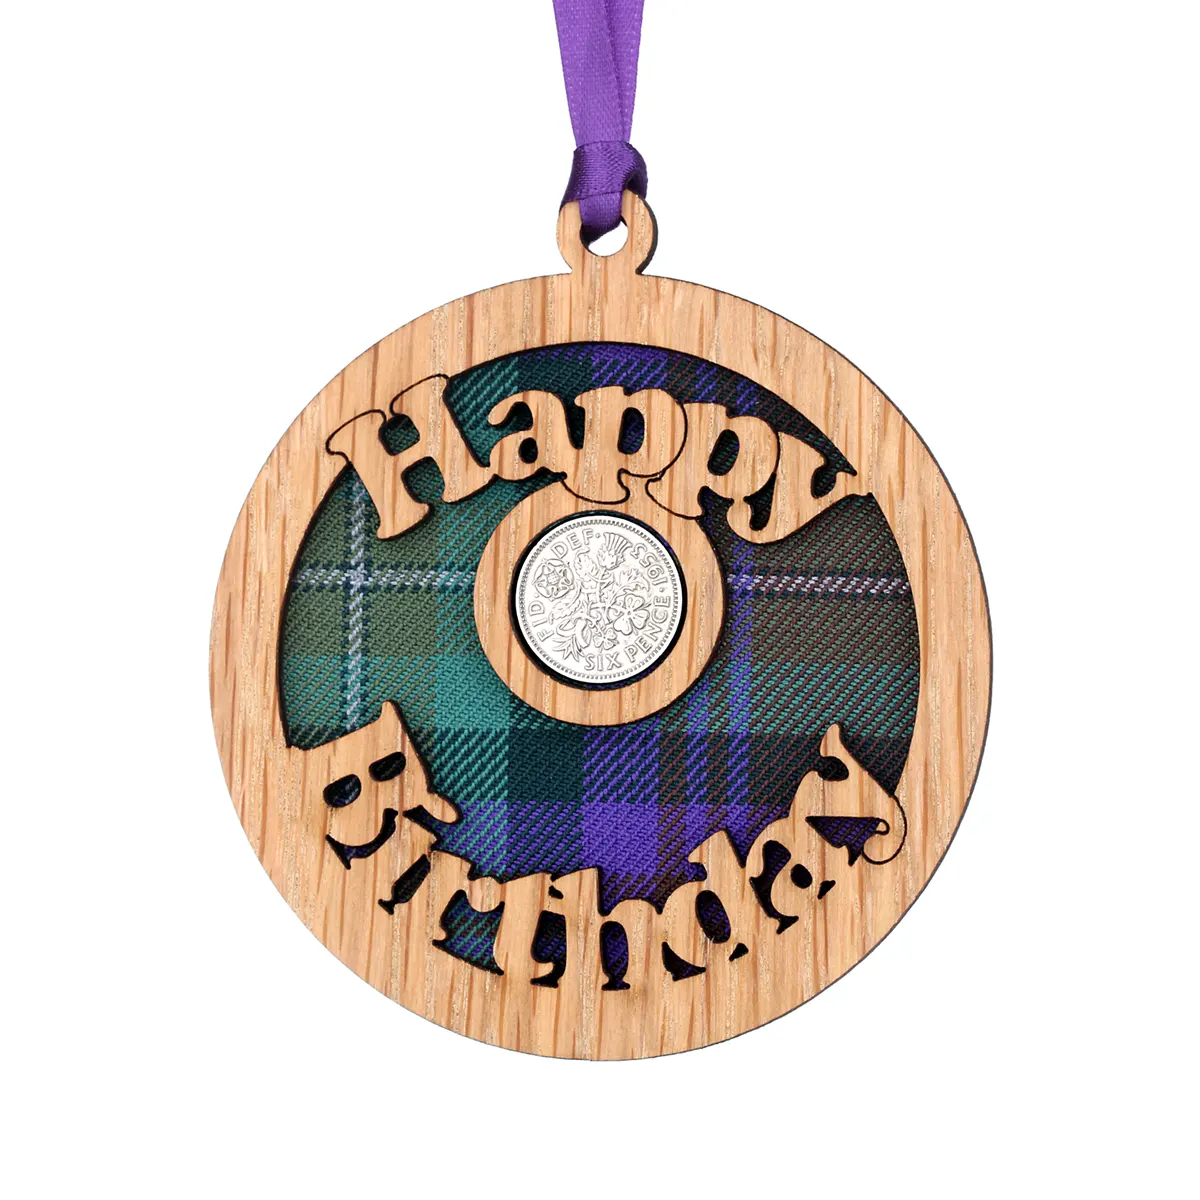 Happy Birthday Lucky Sixpence - Geburtstags-Glücksbringer aus Schottland - Isle of Skye Tartan